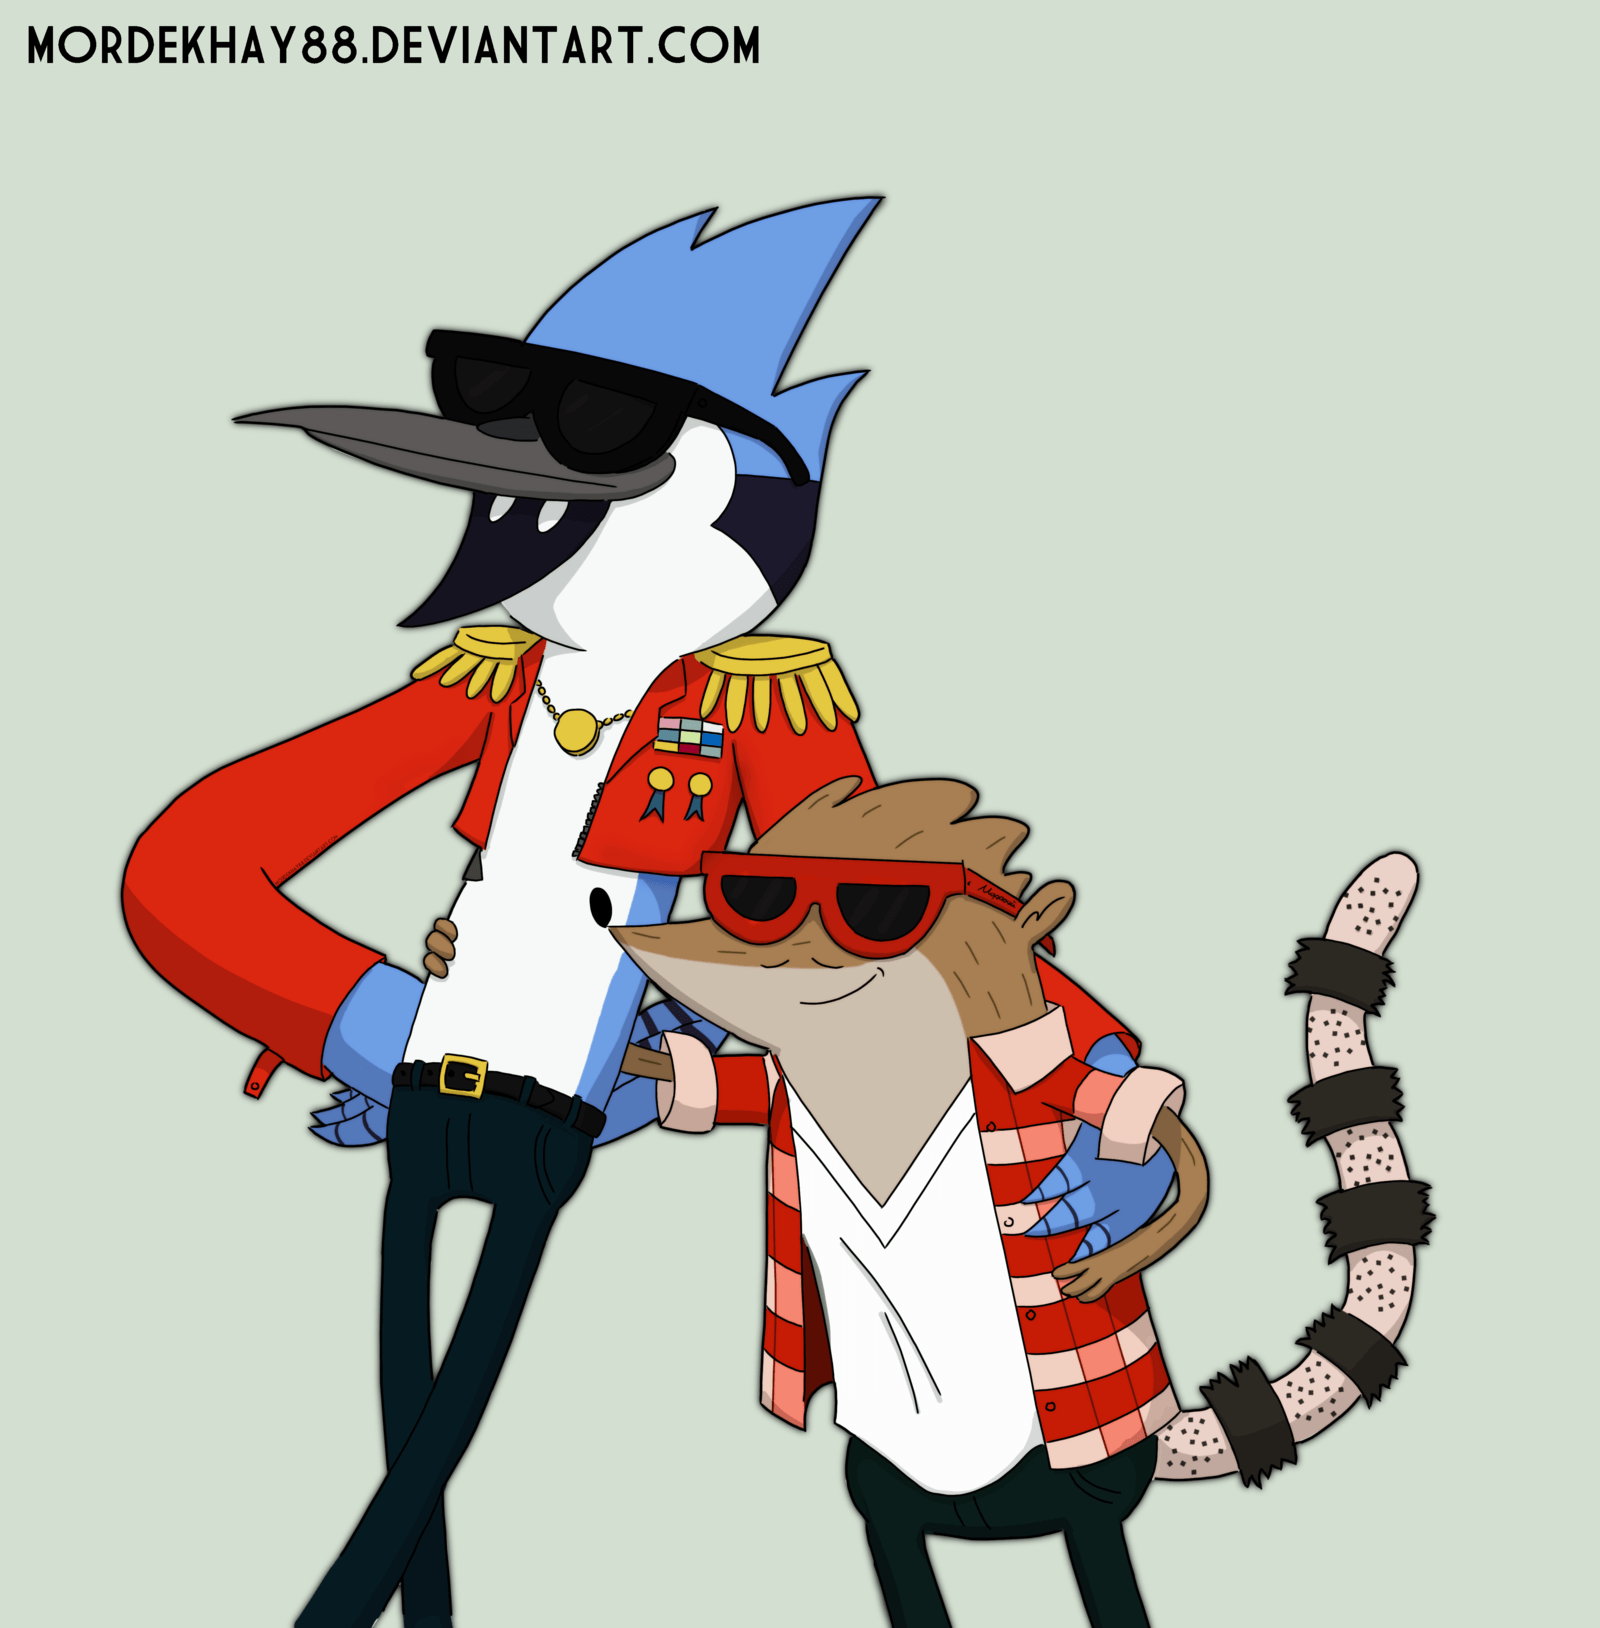 Future Mordecai and Rigby (Digital) by =Mordekhay88